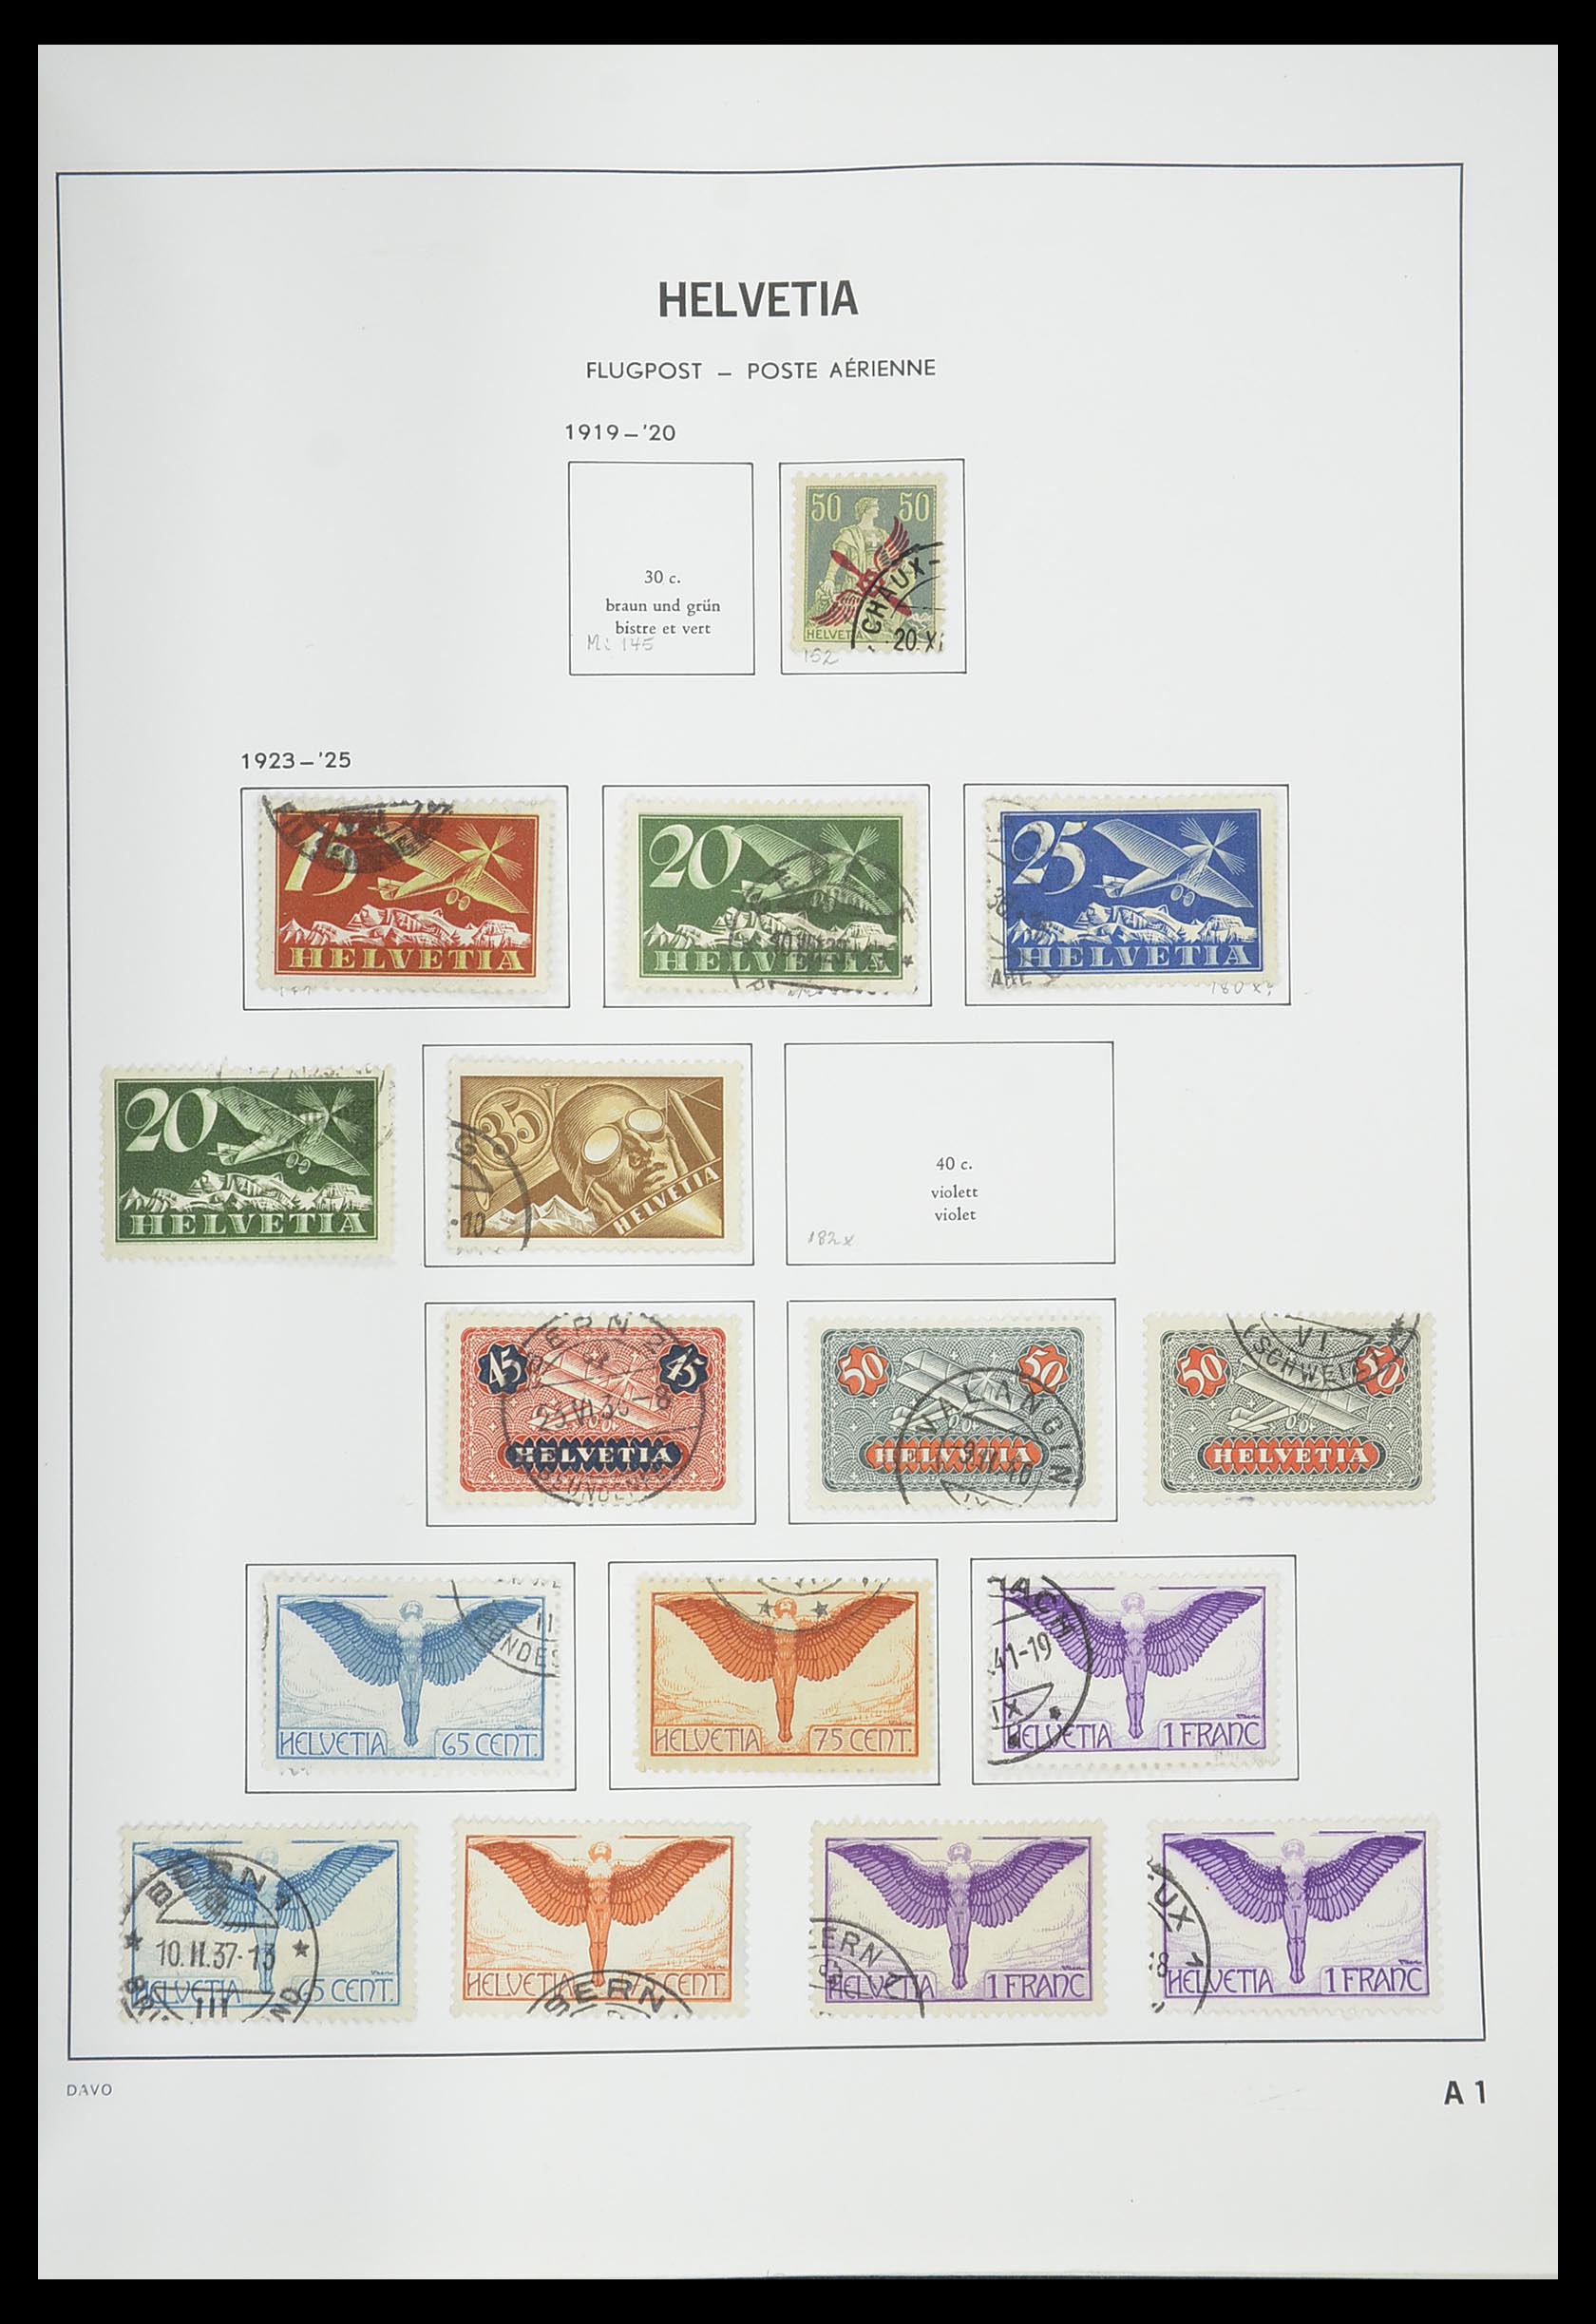 33559 129 - Stamp collection 33559 Switzerland 1850-2000.